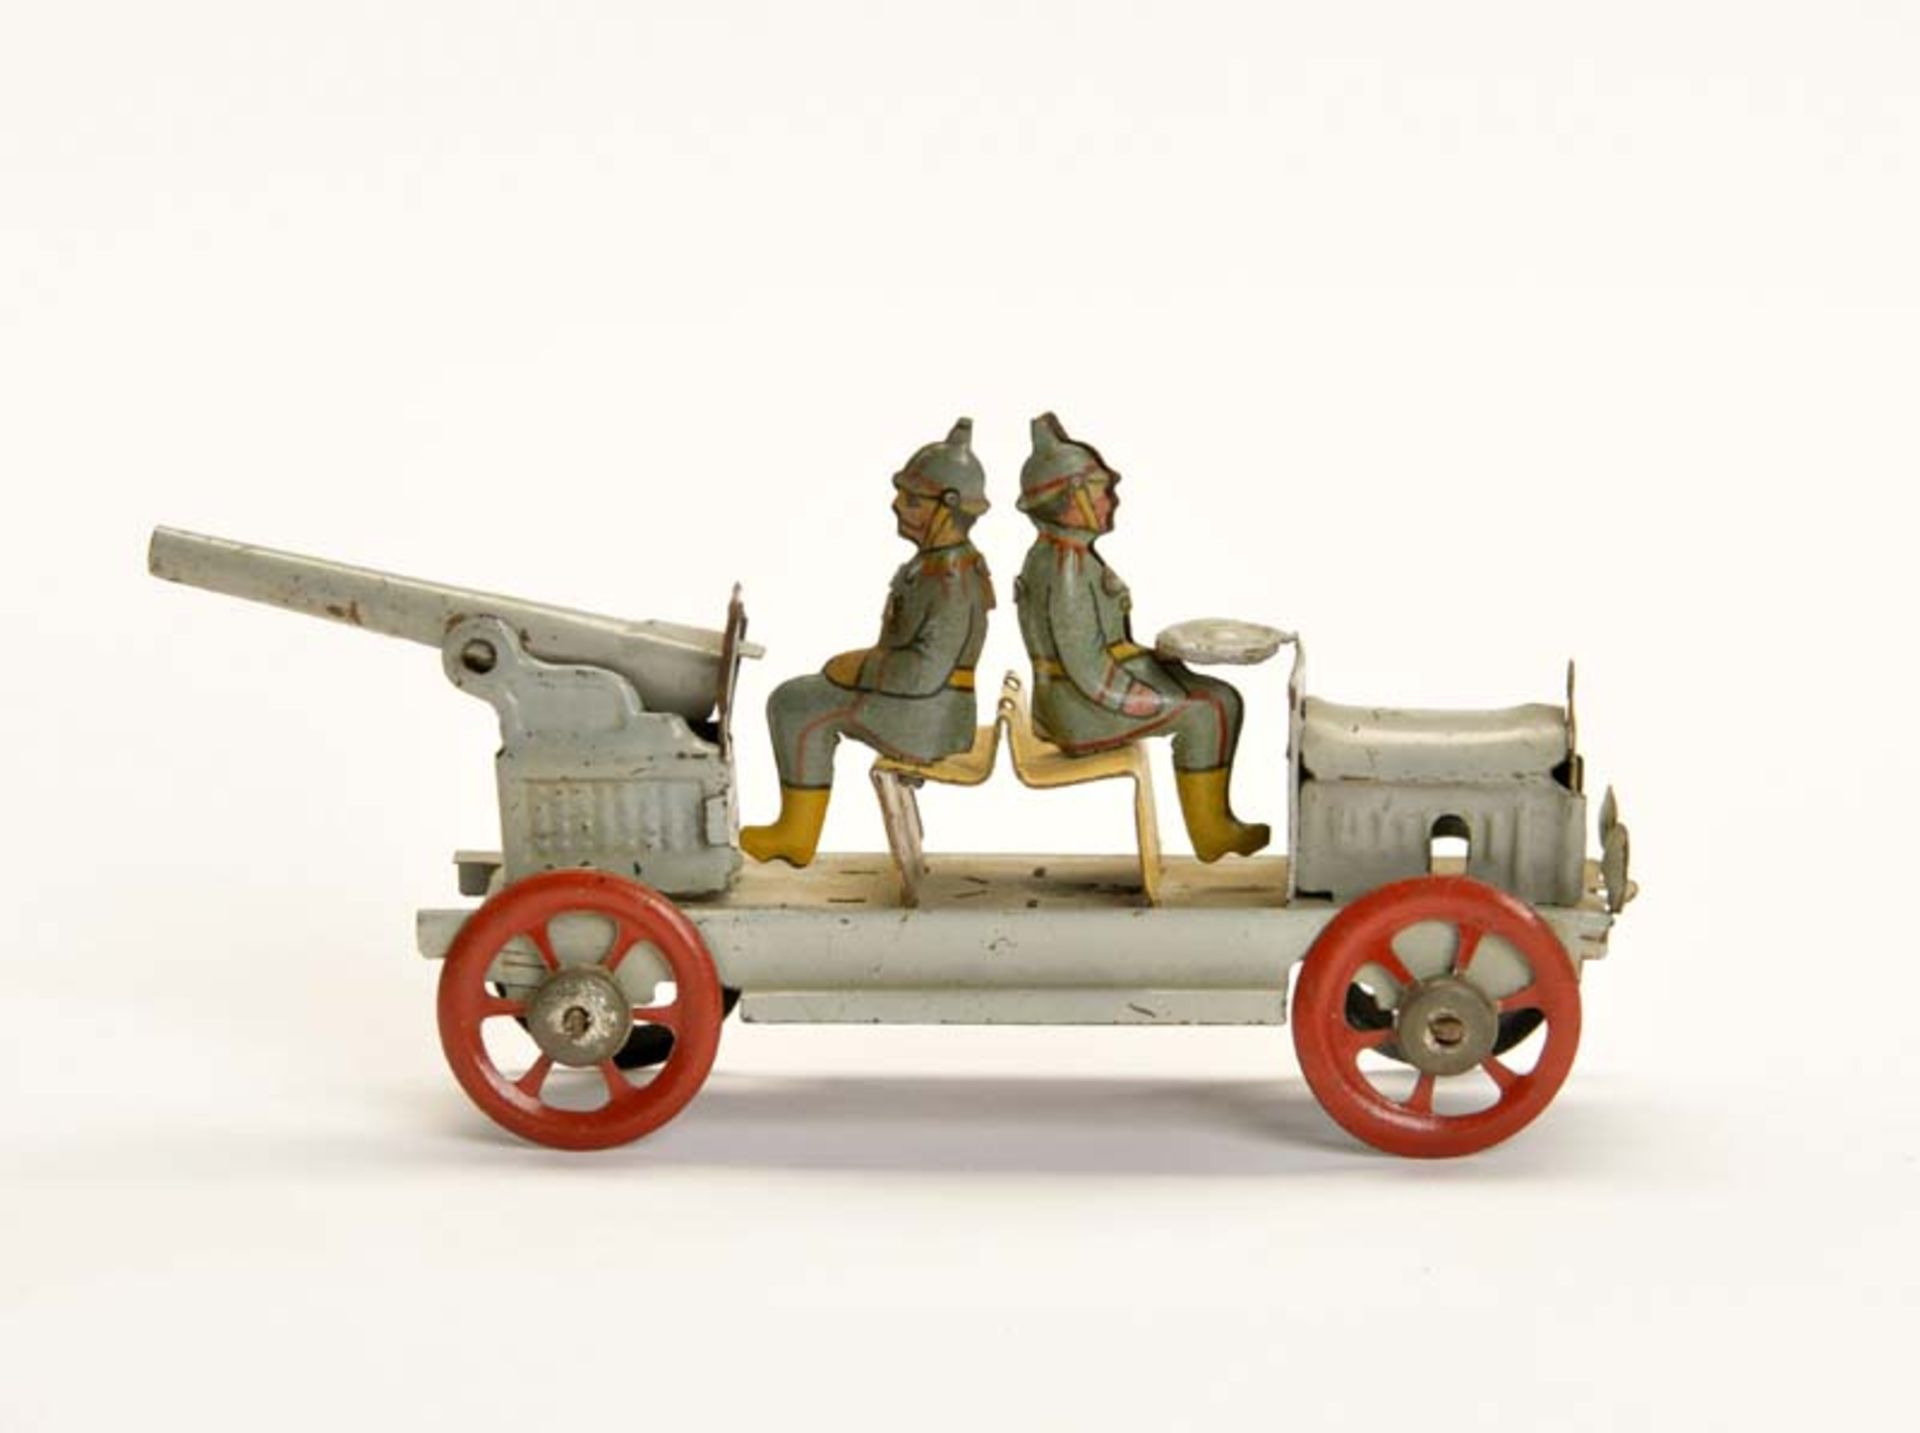 Meier, Penny Toy Militär LKW mit Geschütz, Germany VK, 11 cm, Blech, min. LM - Bild 2 aus 2